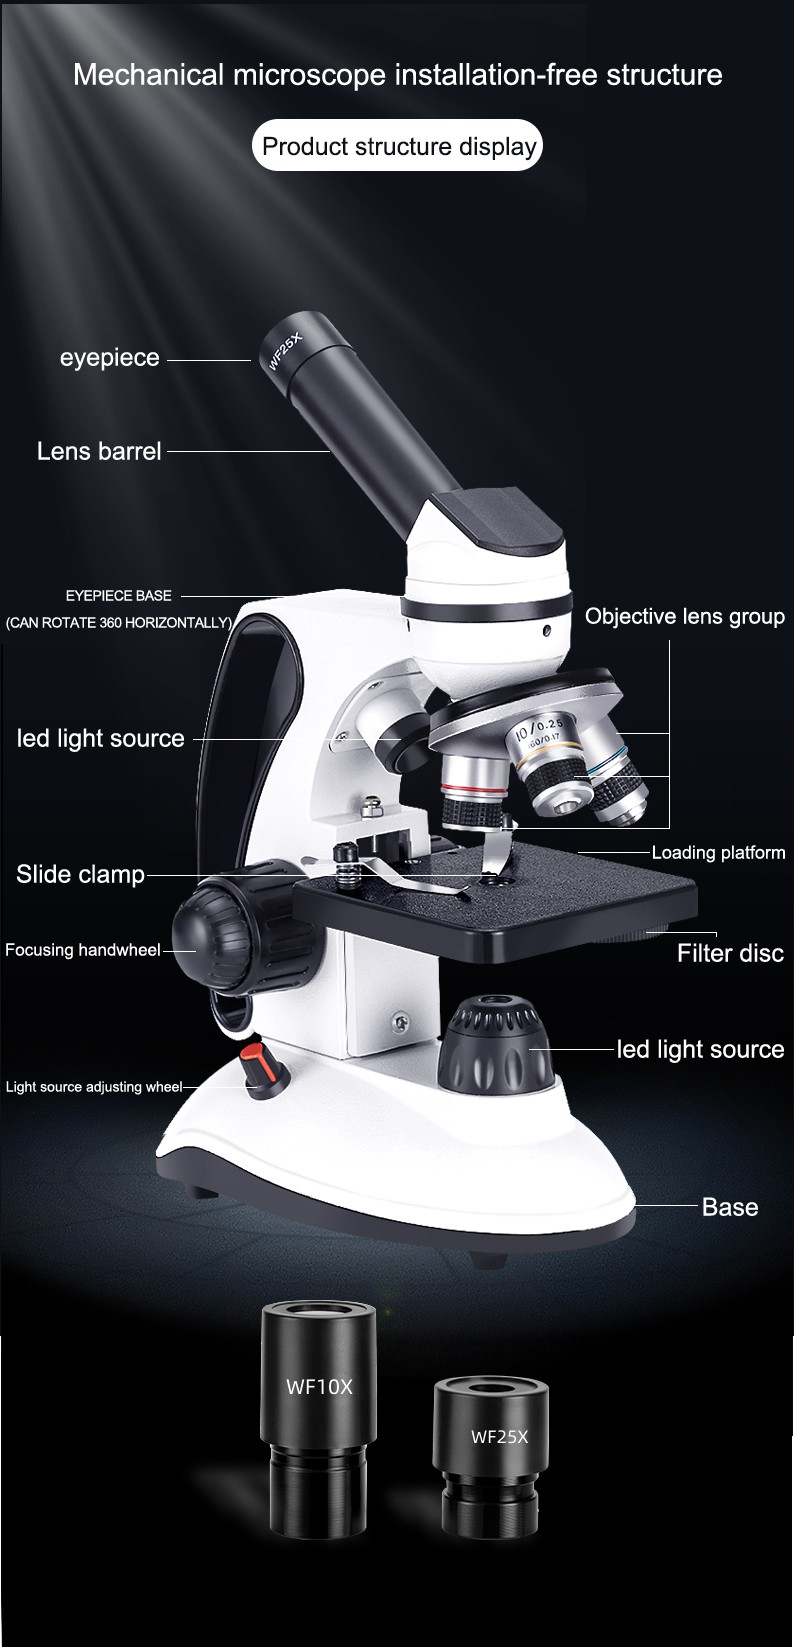 microscope parts